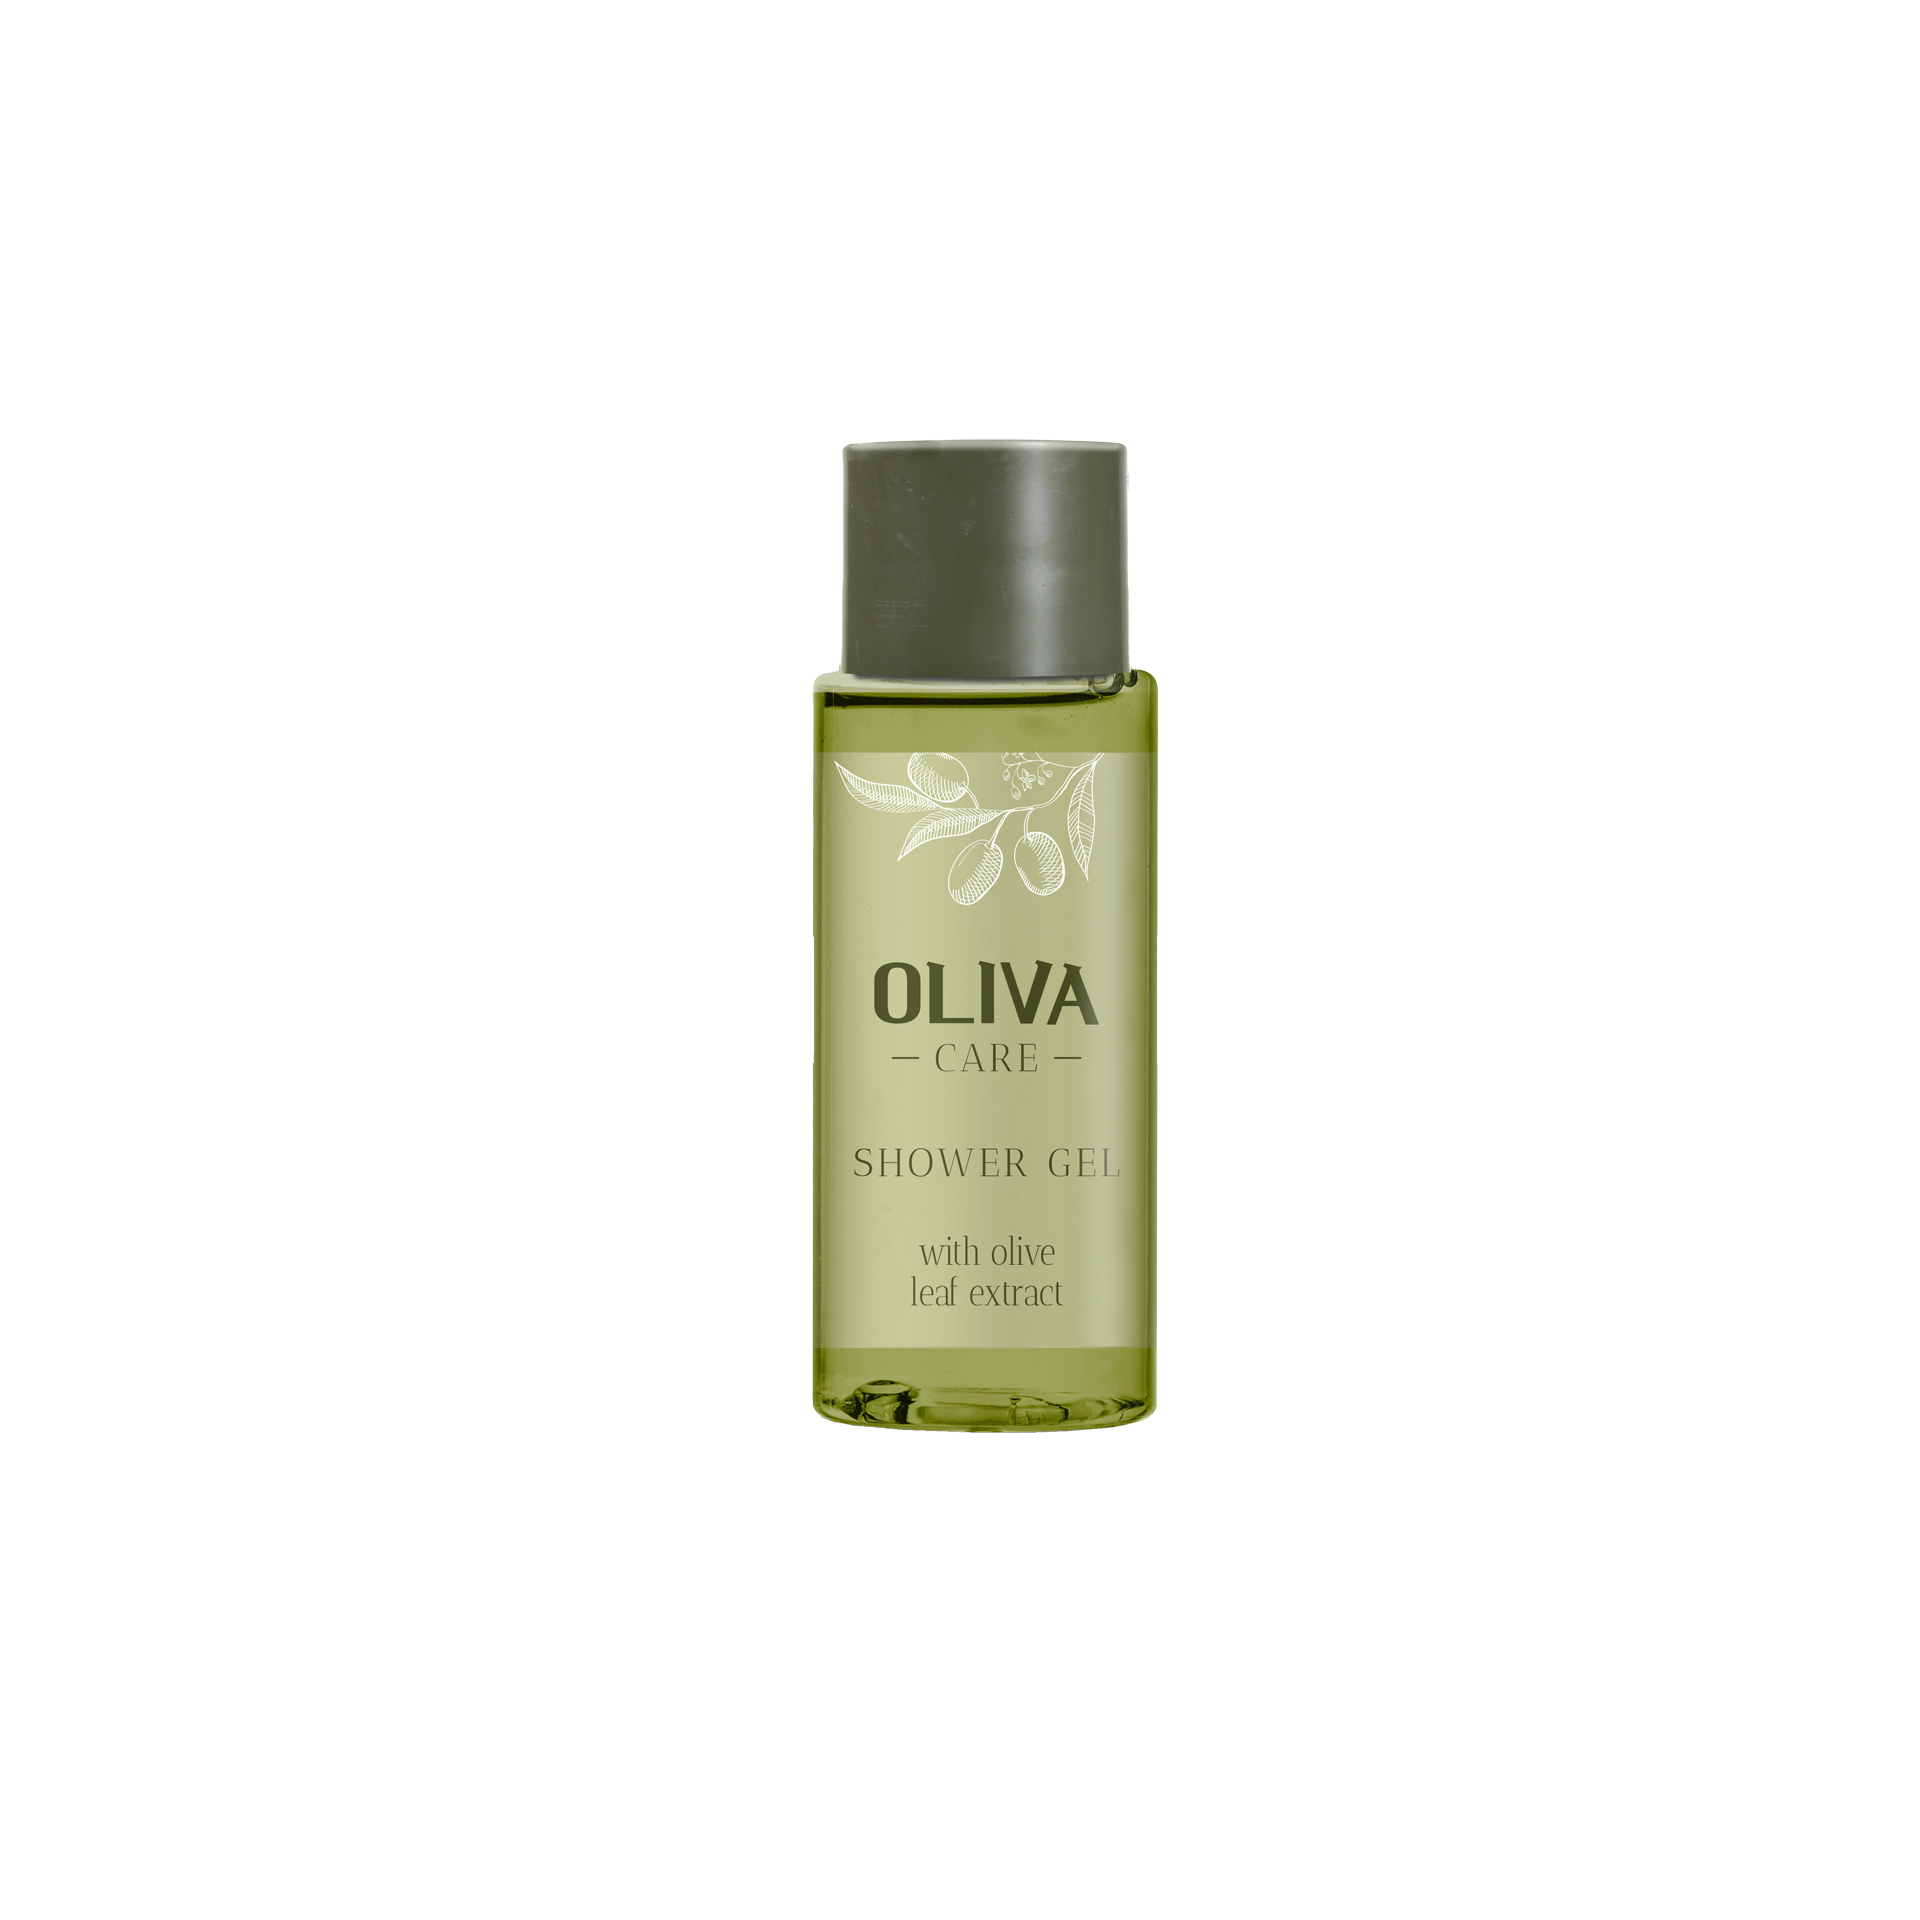 Badeduschgel | Oliva Care mit Olivenblattextrakt Flacon | 30 ml